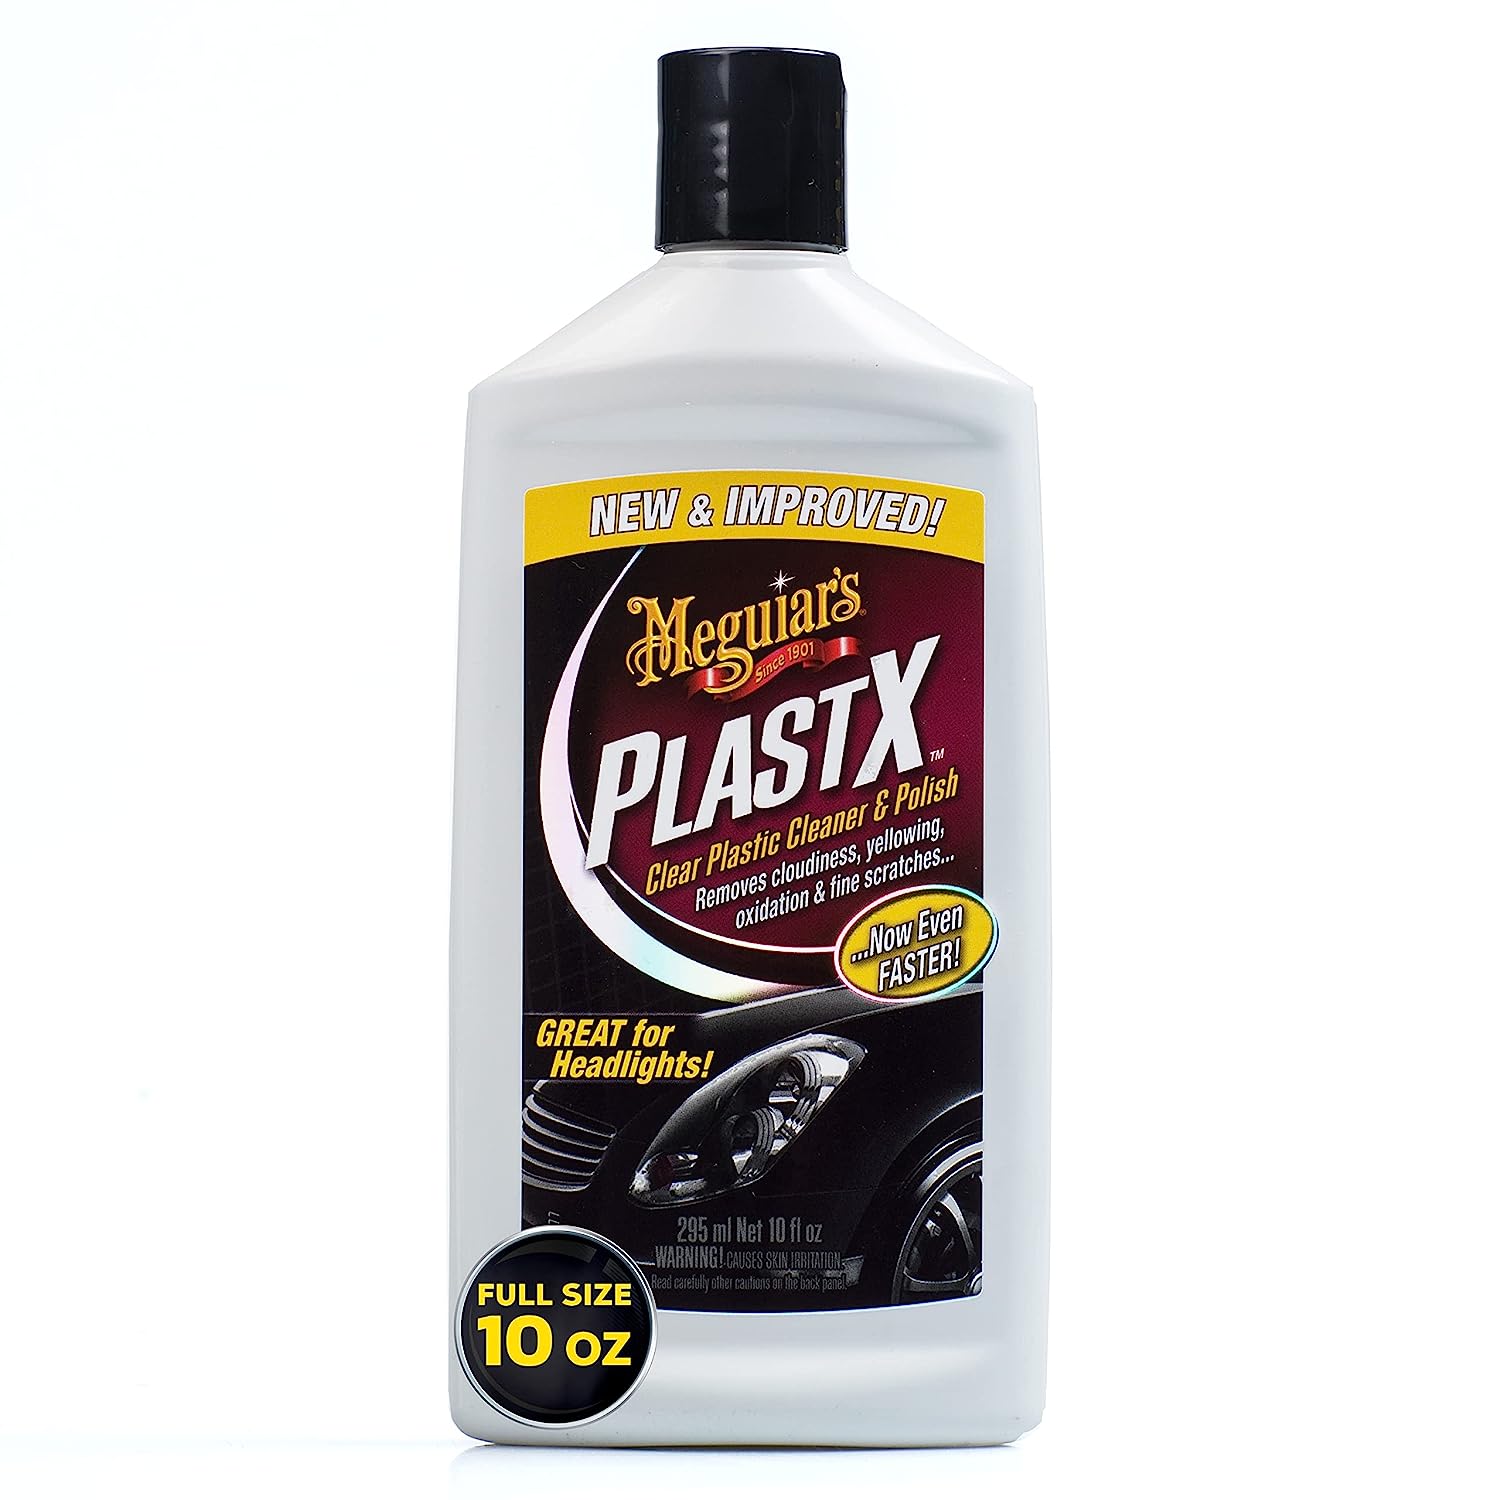 Meguiar's PlastX Clear Plastic Polish, Fast & Easy [...]